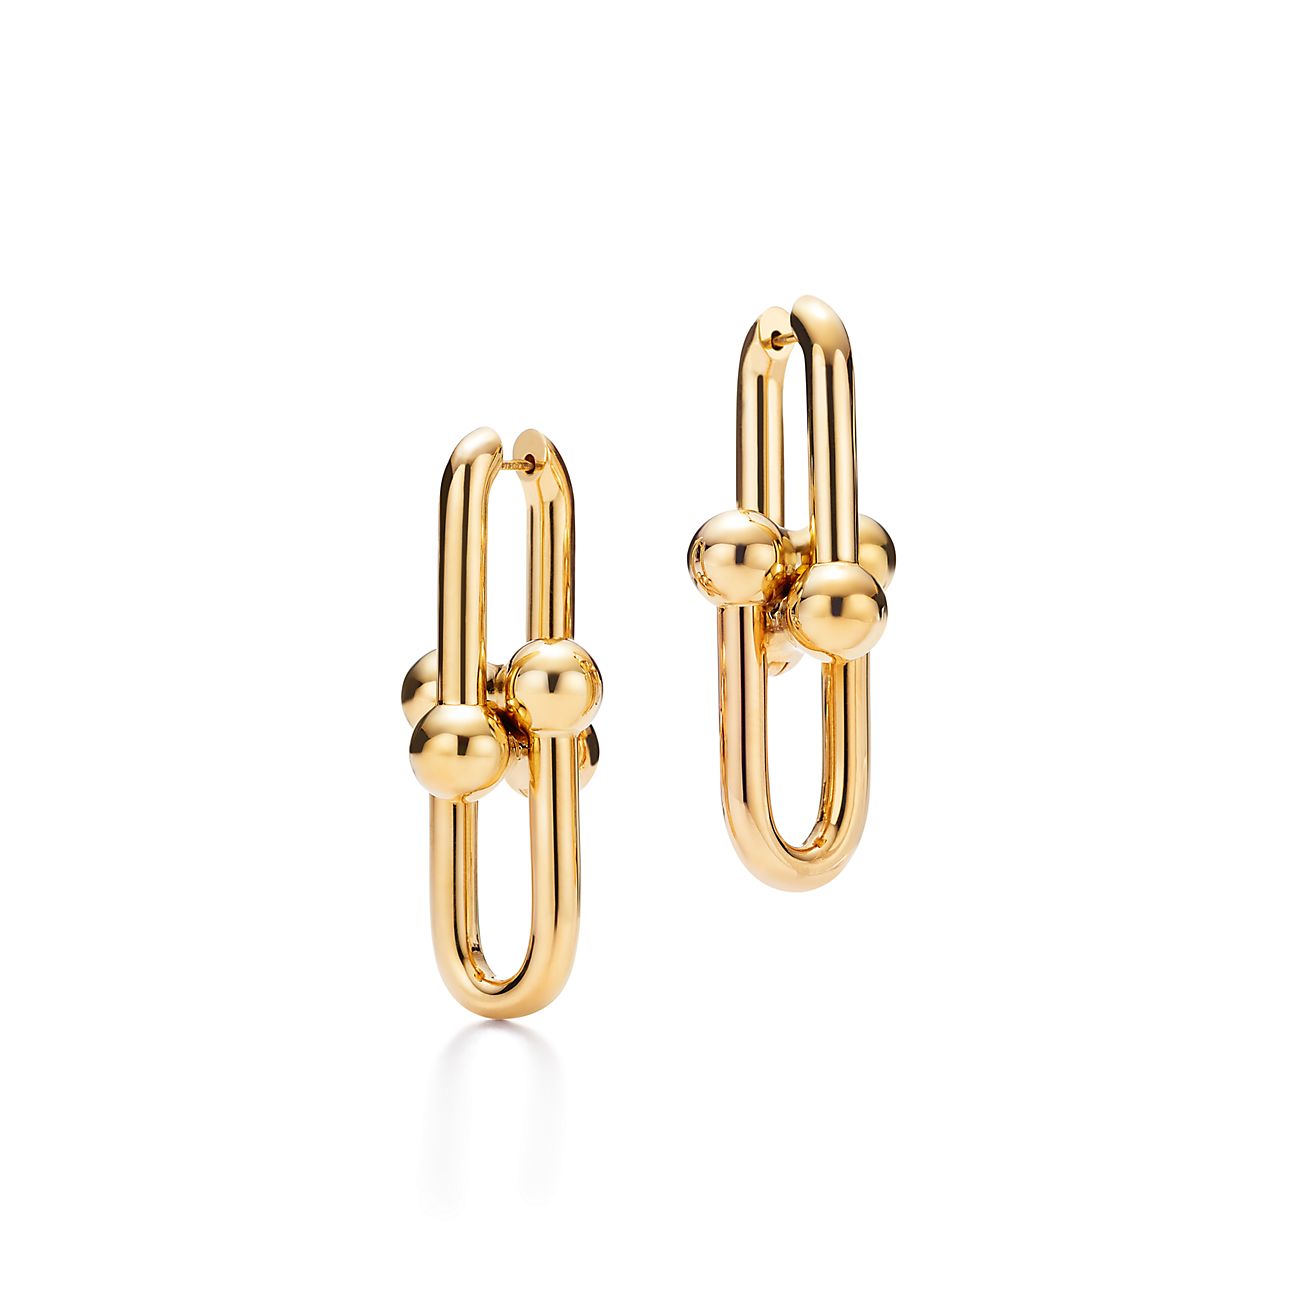 Tiffany HardWear Extra Large Link Earrings in Yellow Gold | Tiffany u0026 Co.